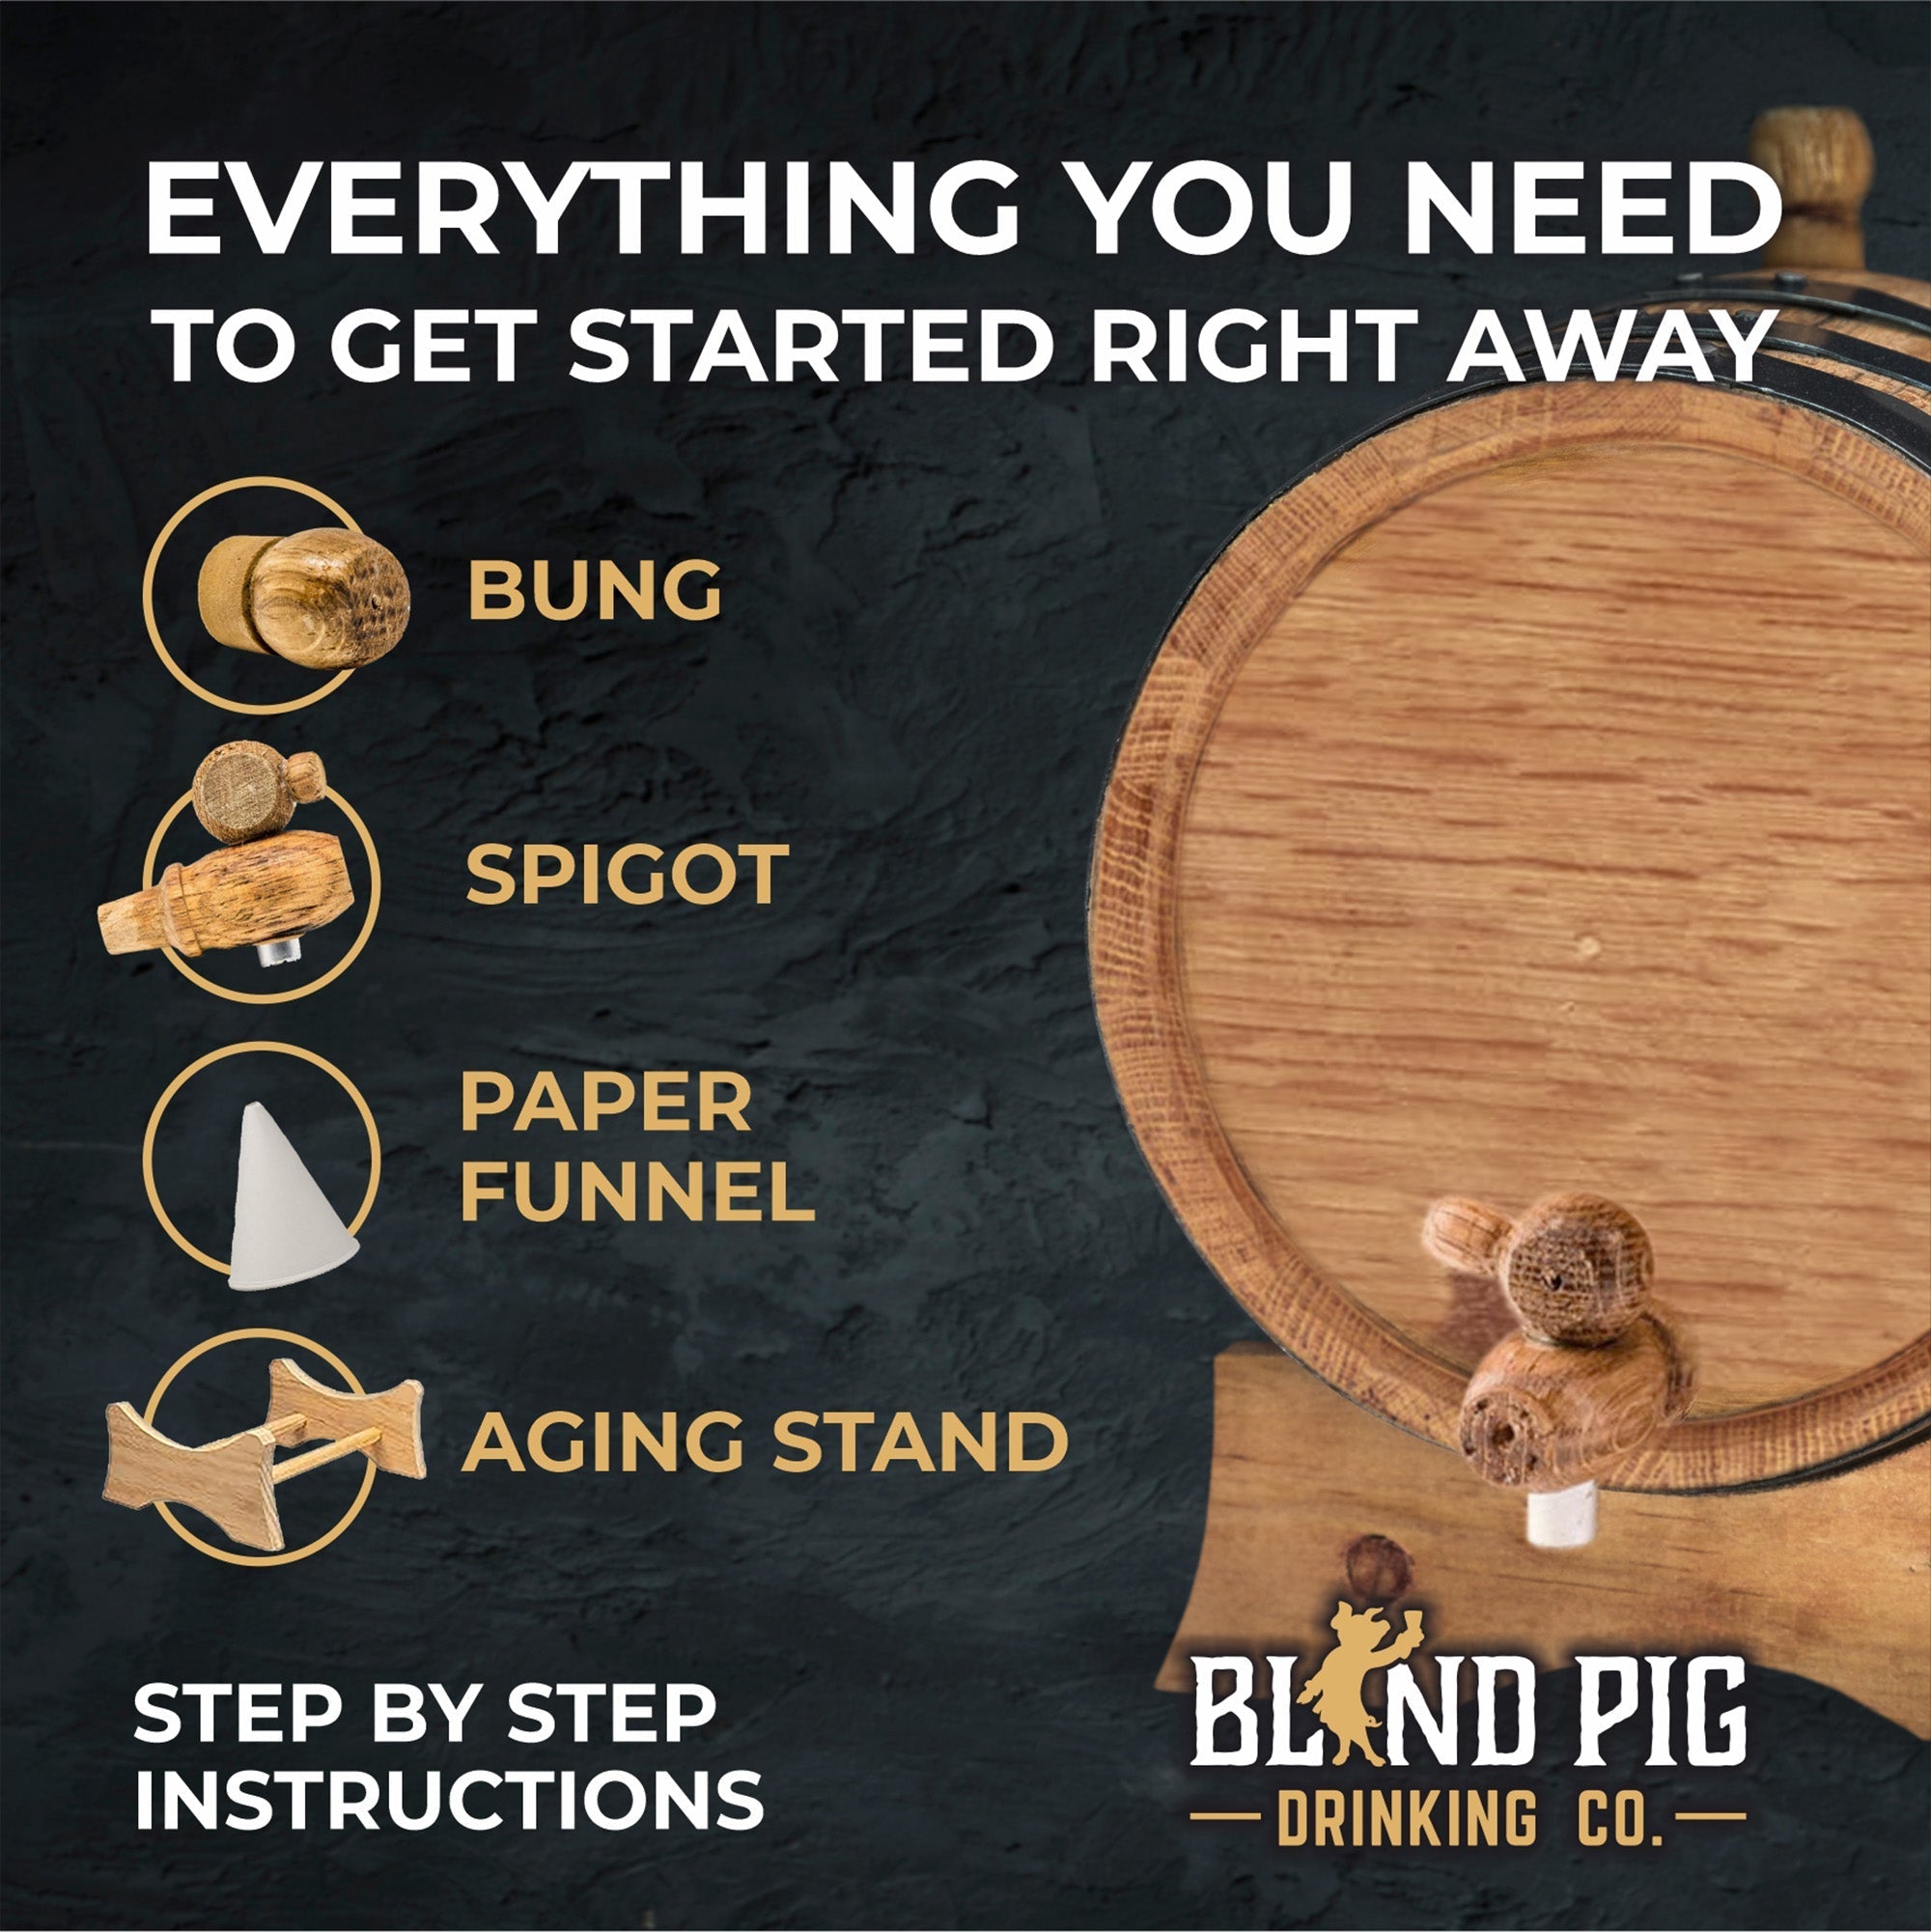 Personalized Small Oak Barrel for Aging Cocktails - Split Monogram - Blind Pig Drinking Co.